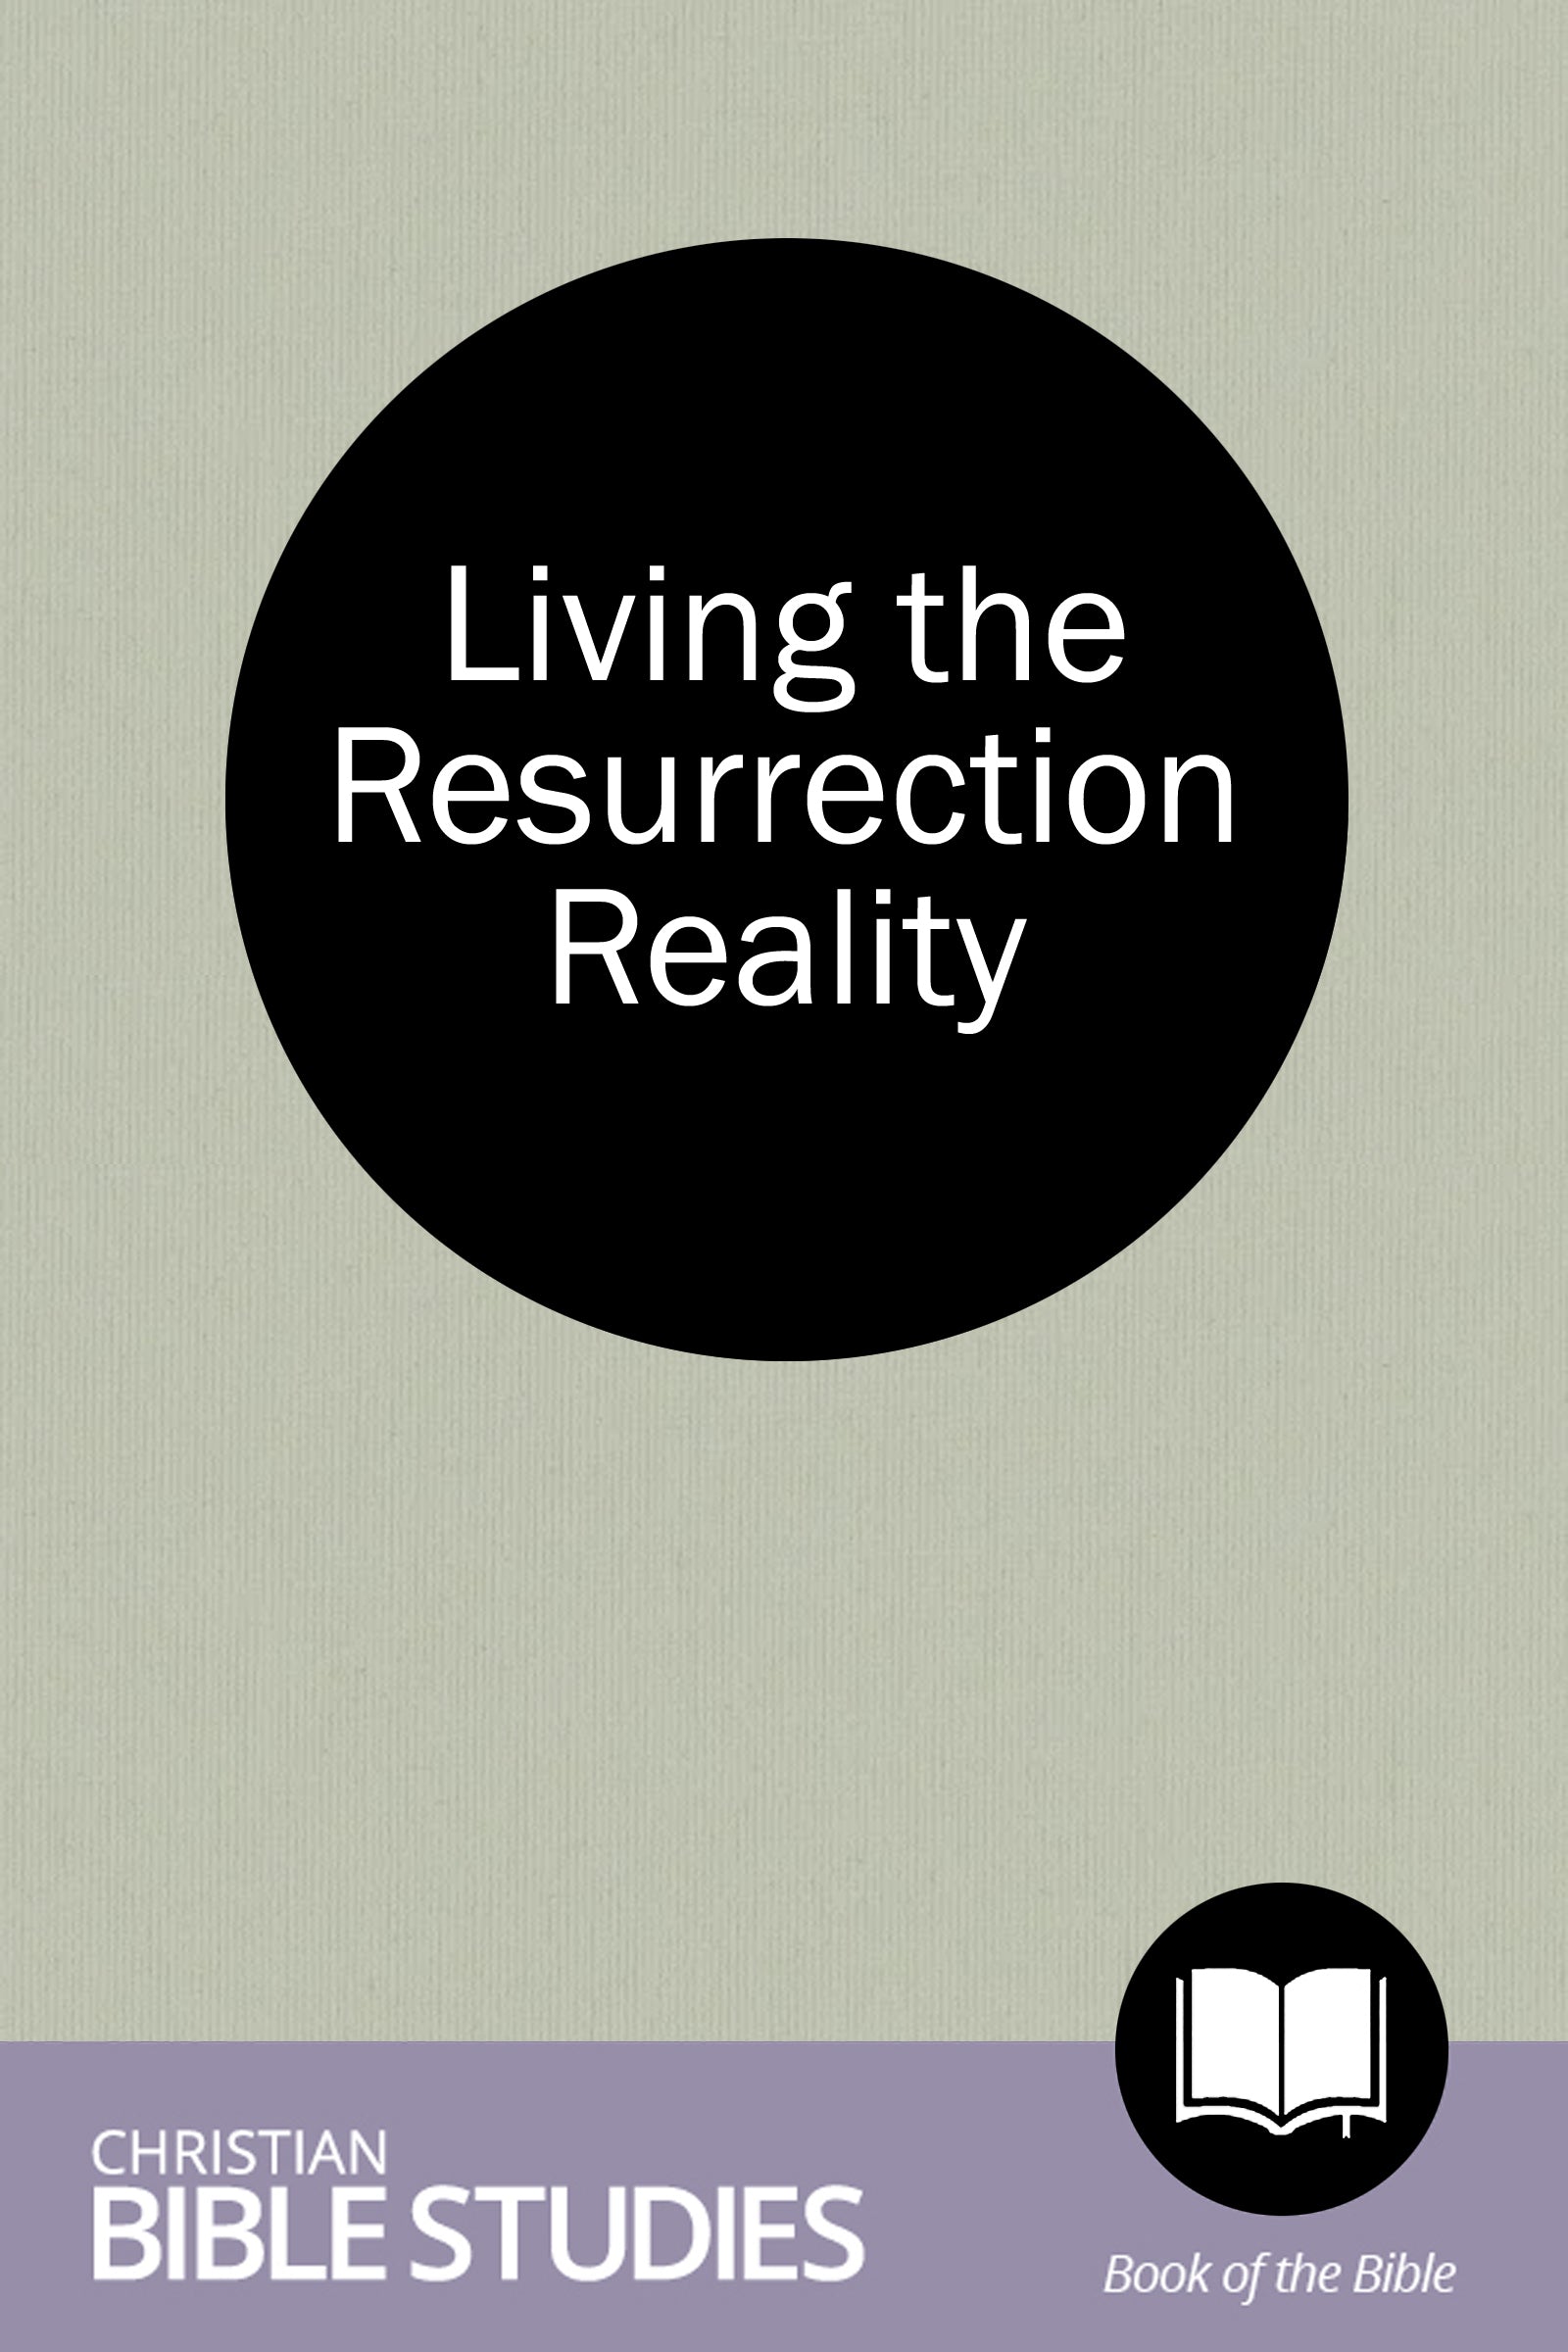 Living the Resurrection Reality